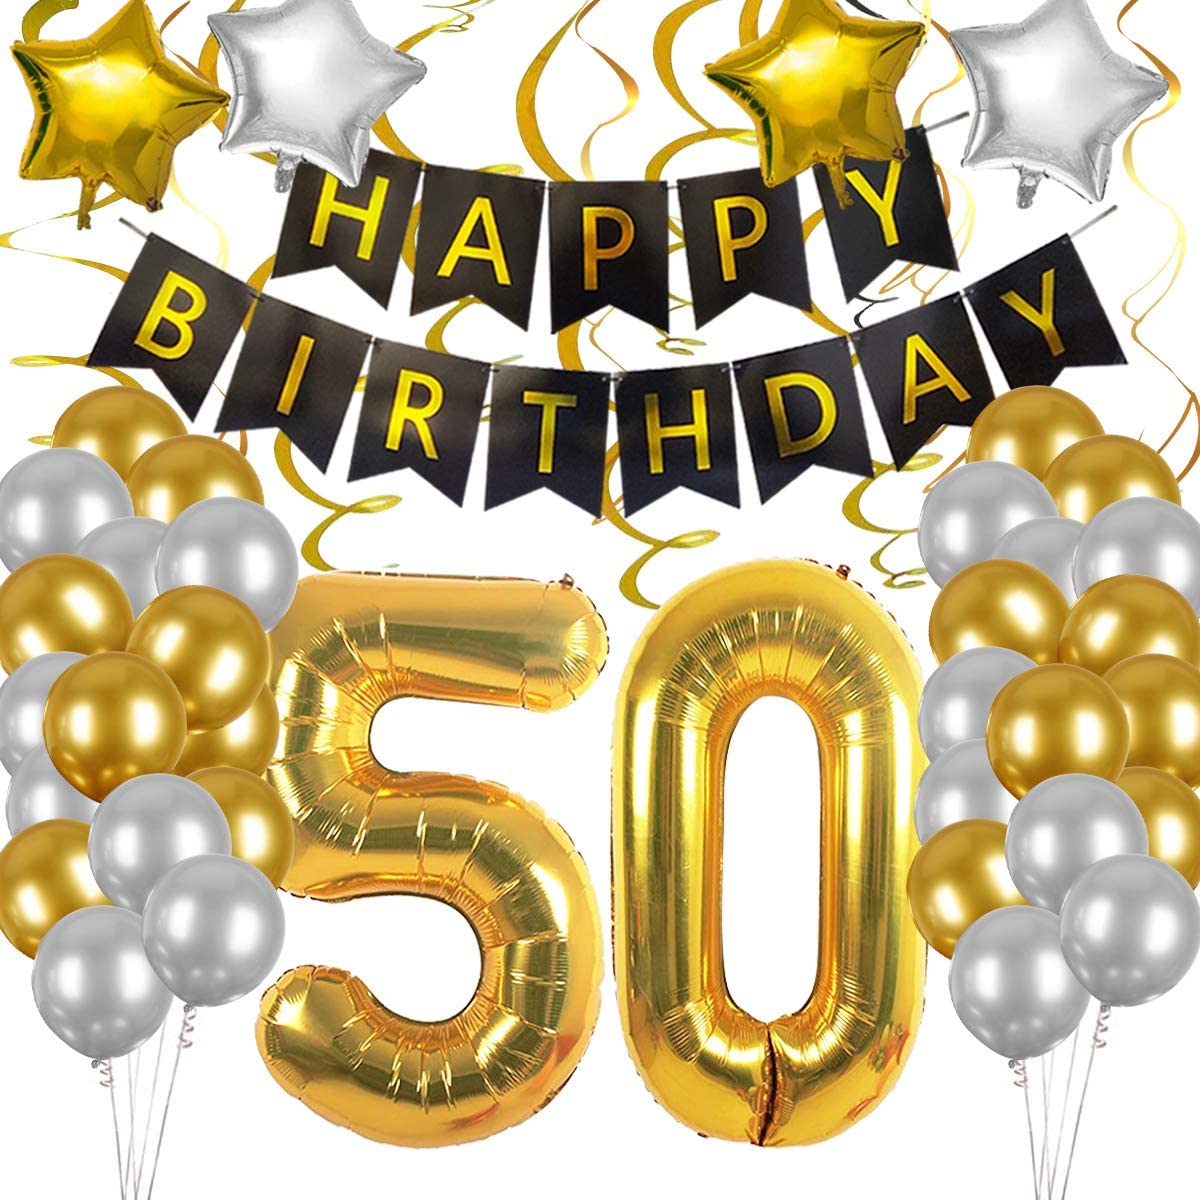 Happy 50th Birthday Image